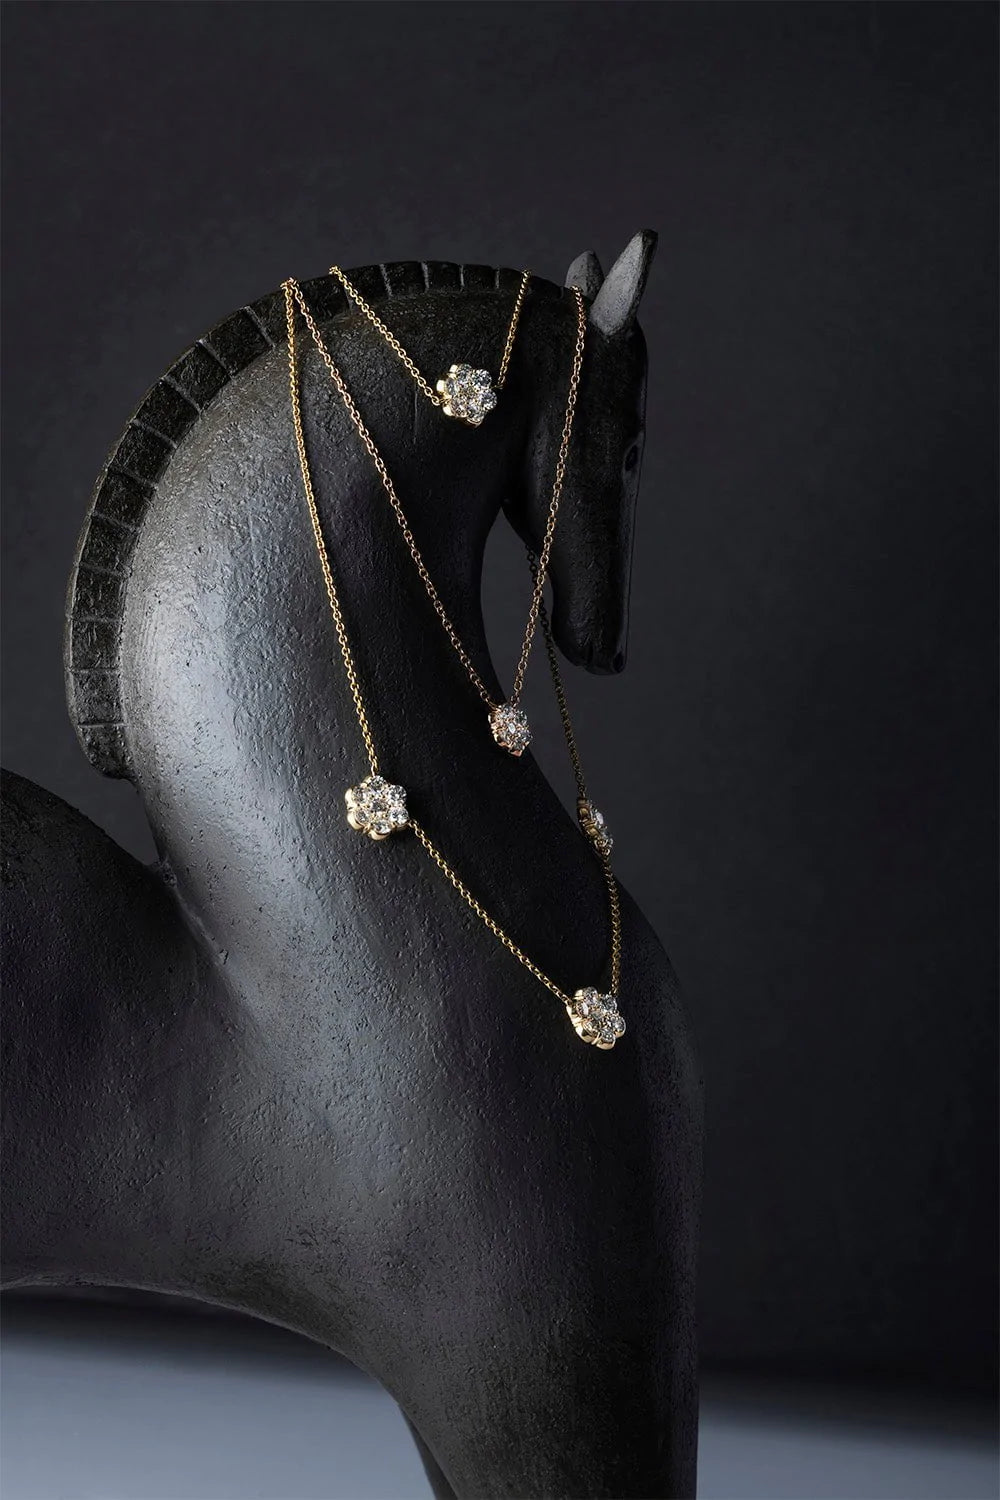 BAYCO-Small Diamond Flower Pendant Necklace-YELLOW GOLD